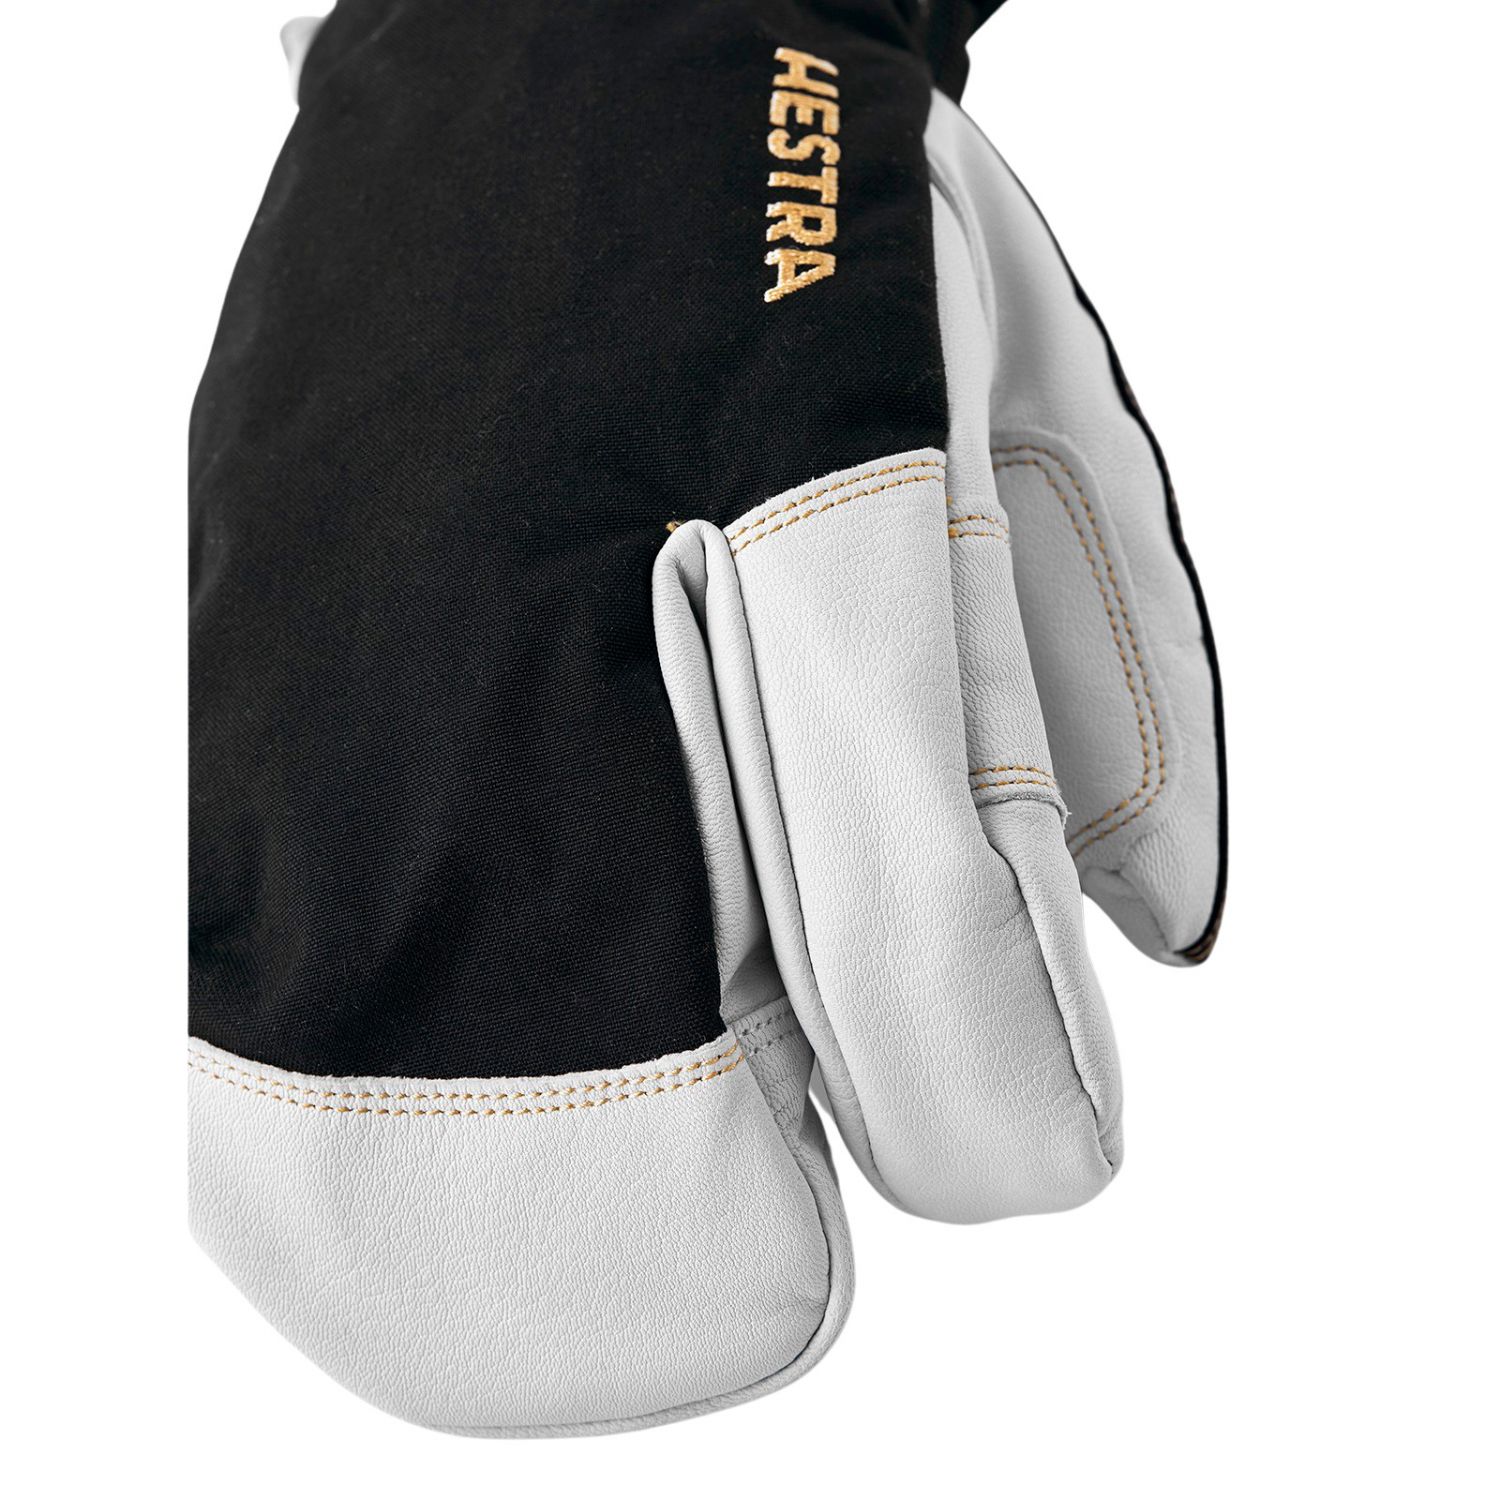 sko Marty Fielding at lege Hestra Army Leather Gore-Tex 3-finger, ski gloves, black